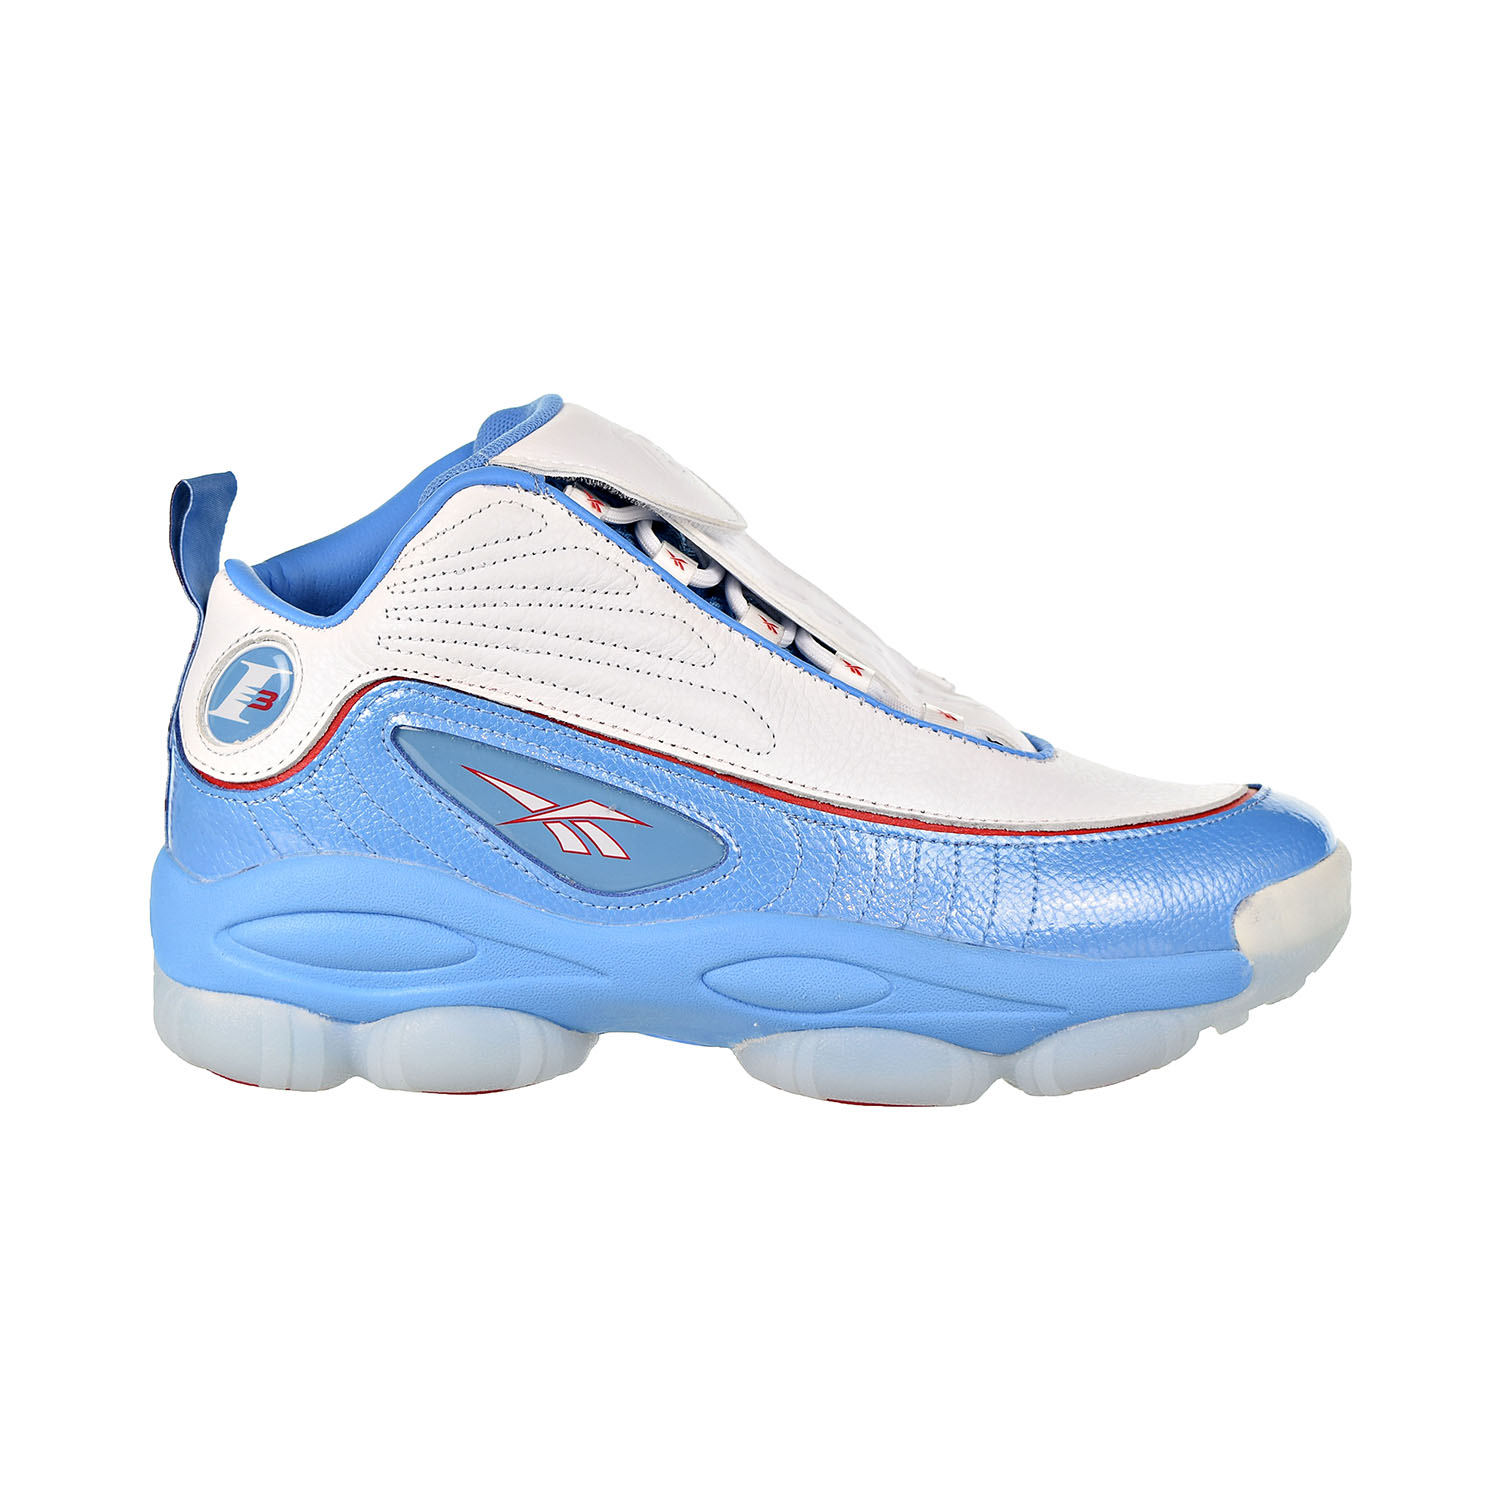 Reebok Iverson Legacy Unisex Shoes Athletic Blue-White-Red CN8405 | eBay